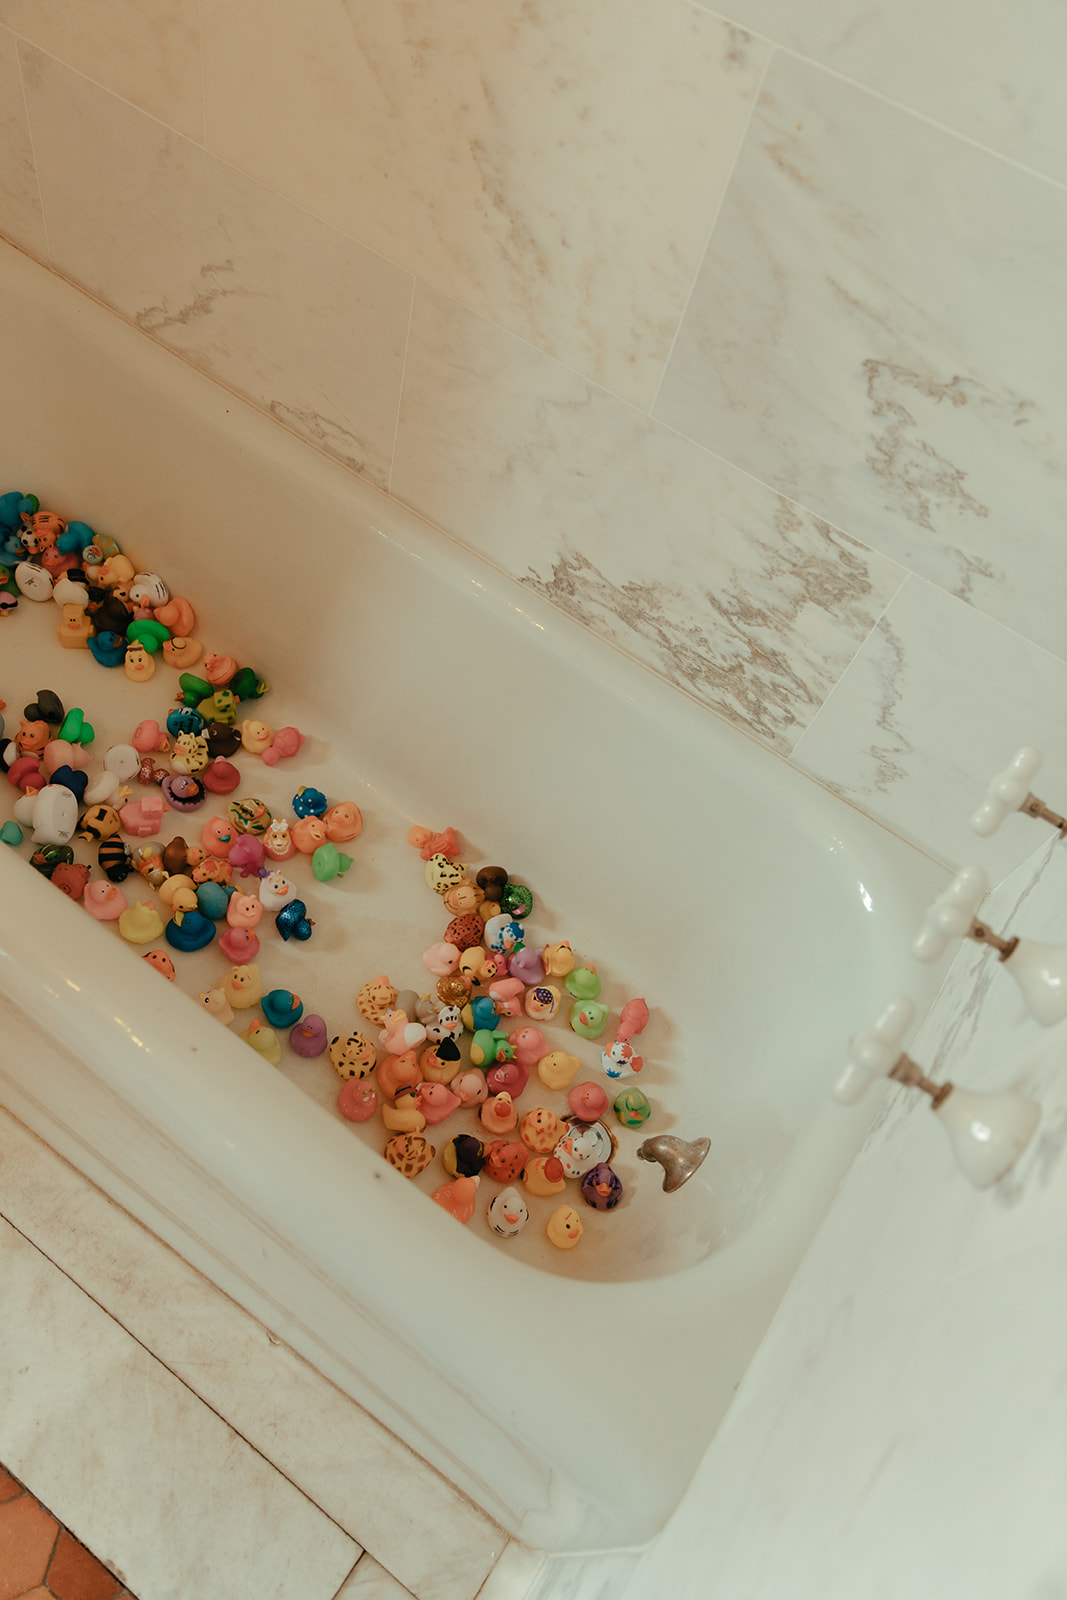 Rubber duckies in bathtubs at Villa Terrace